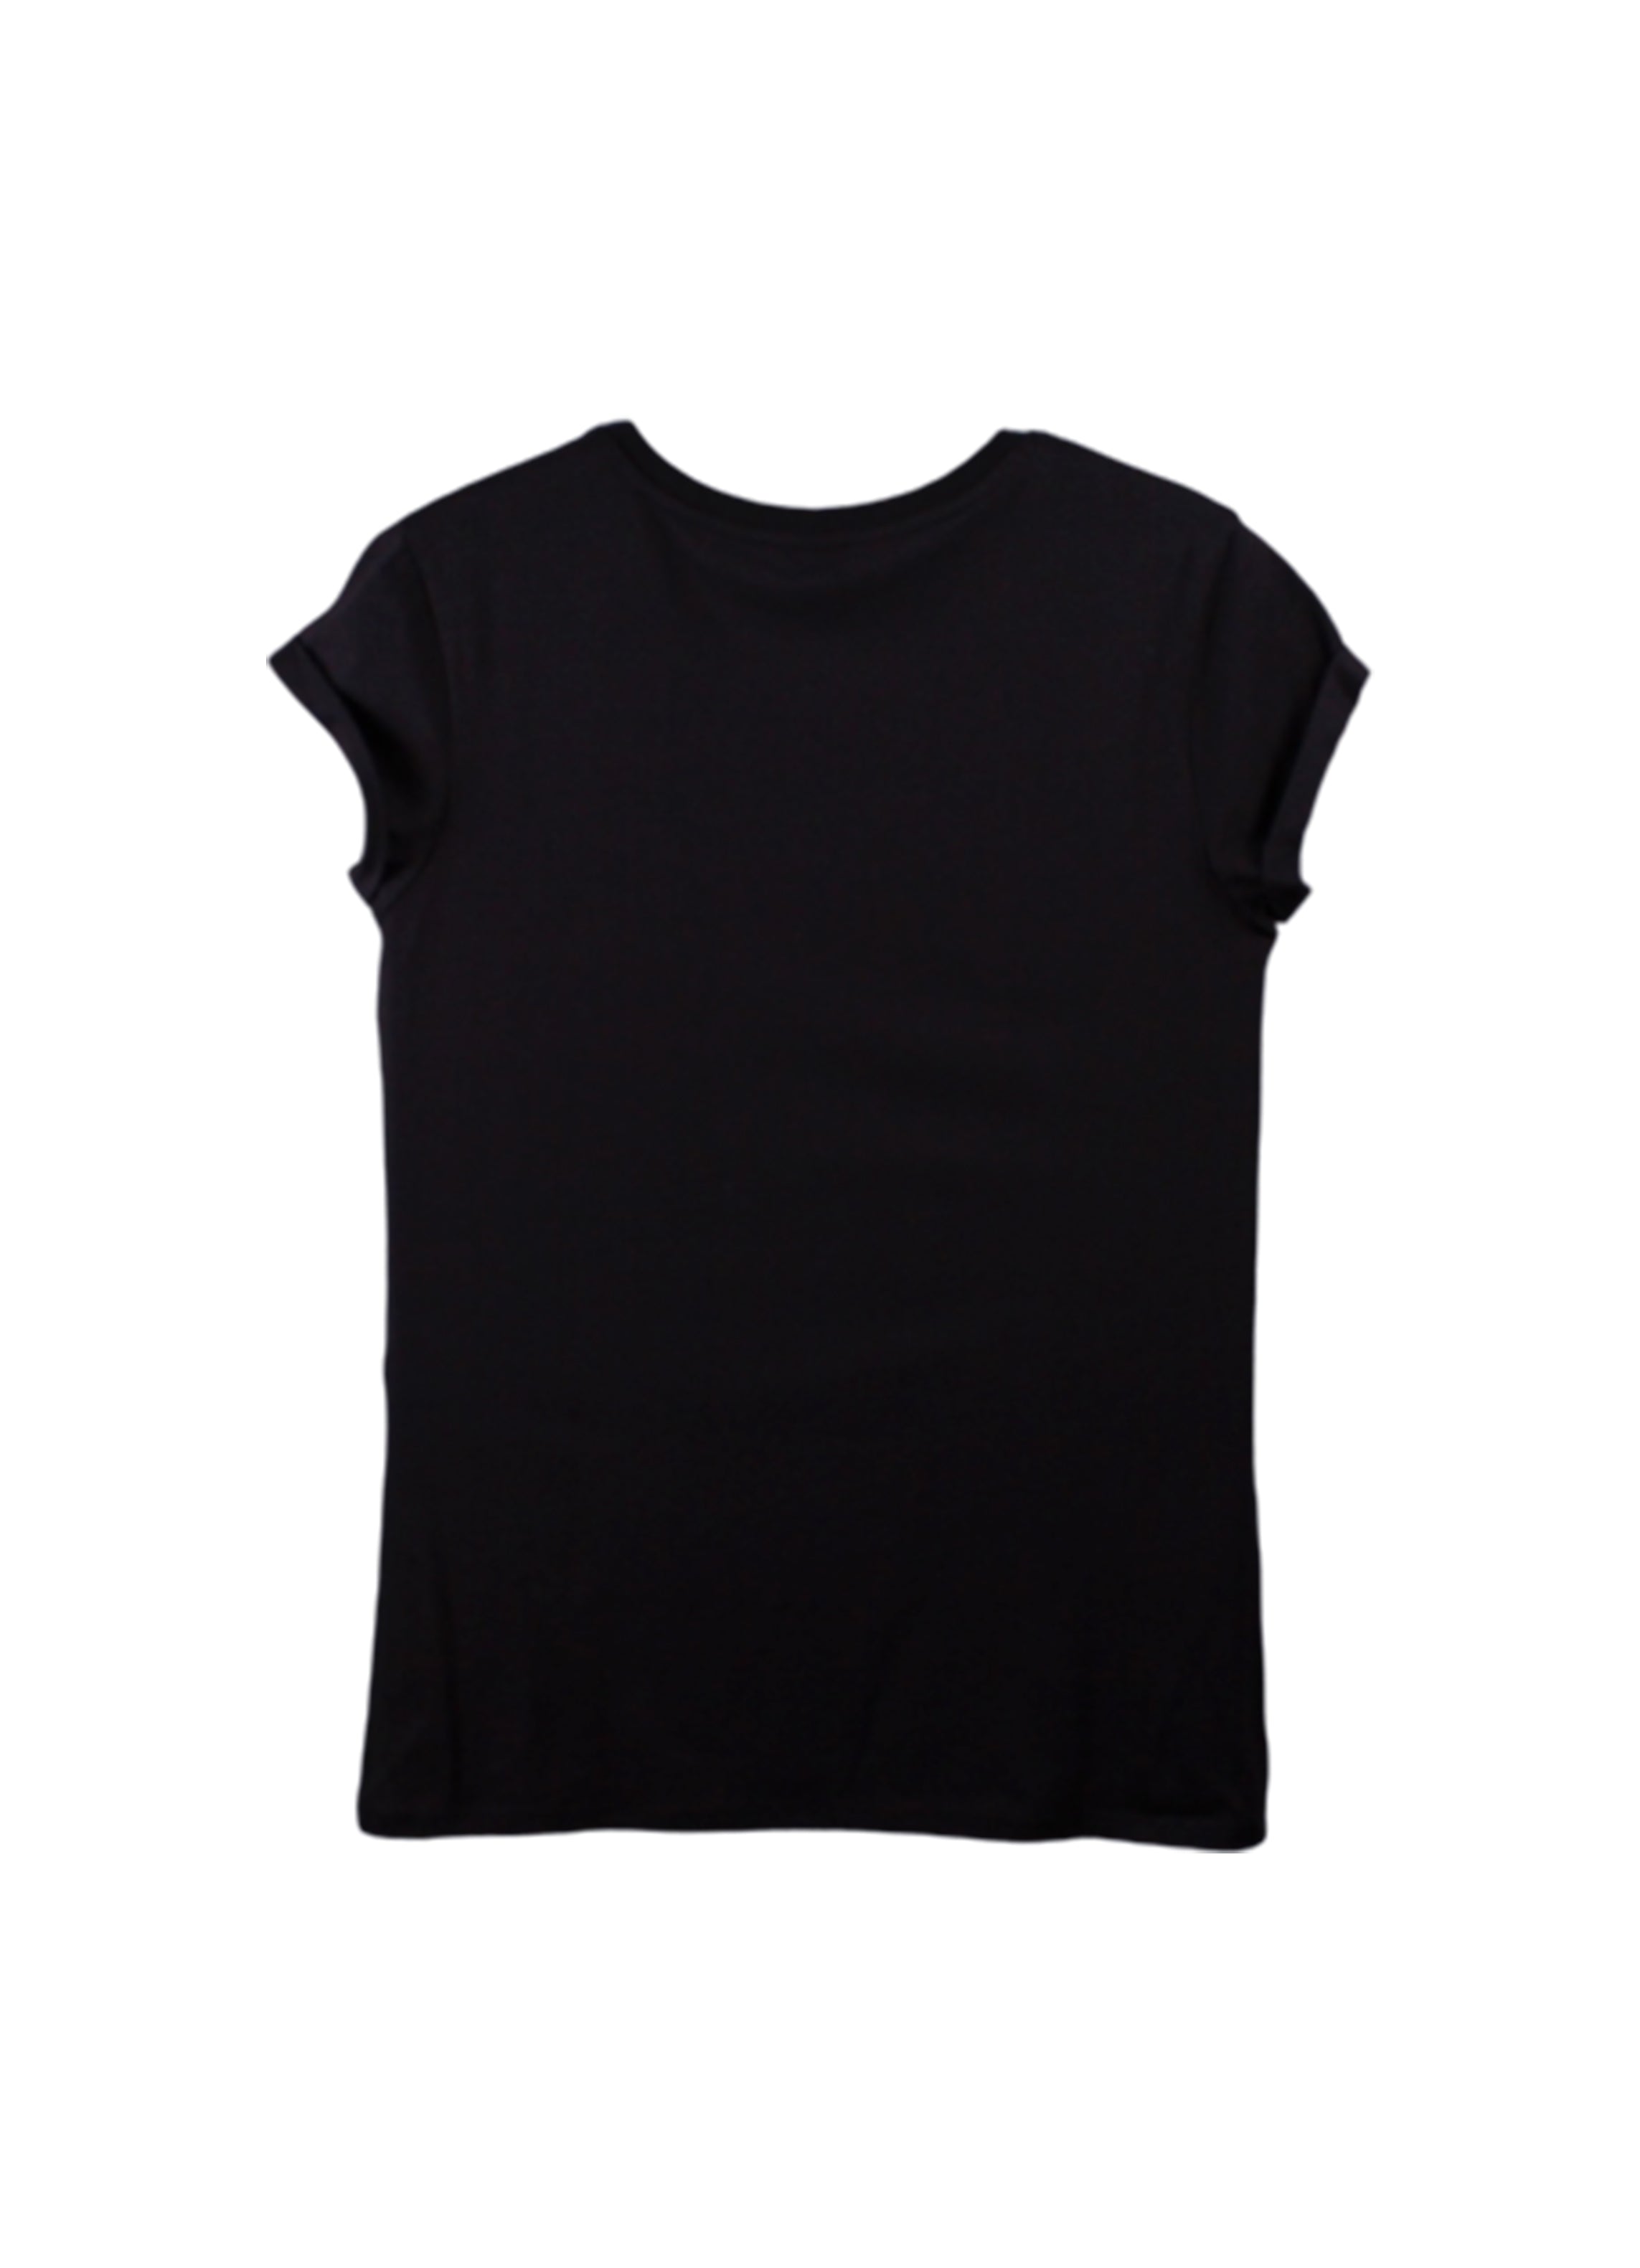 Frauen T-Shirt Banger Logo Schwarz